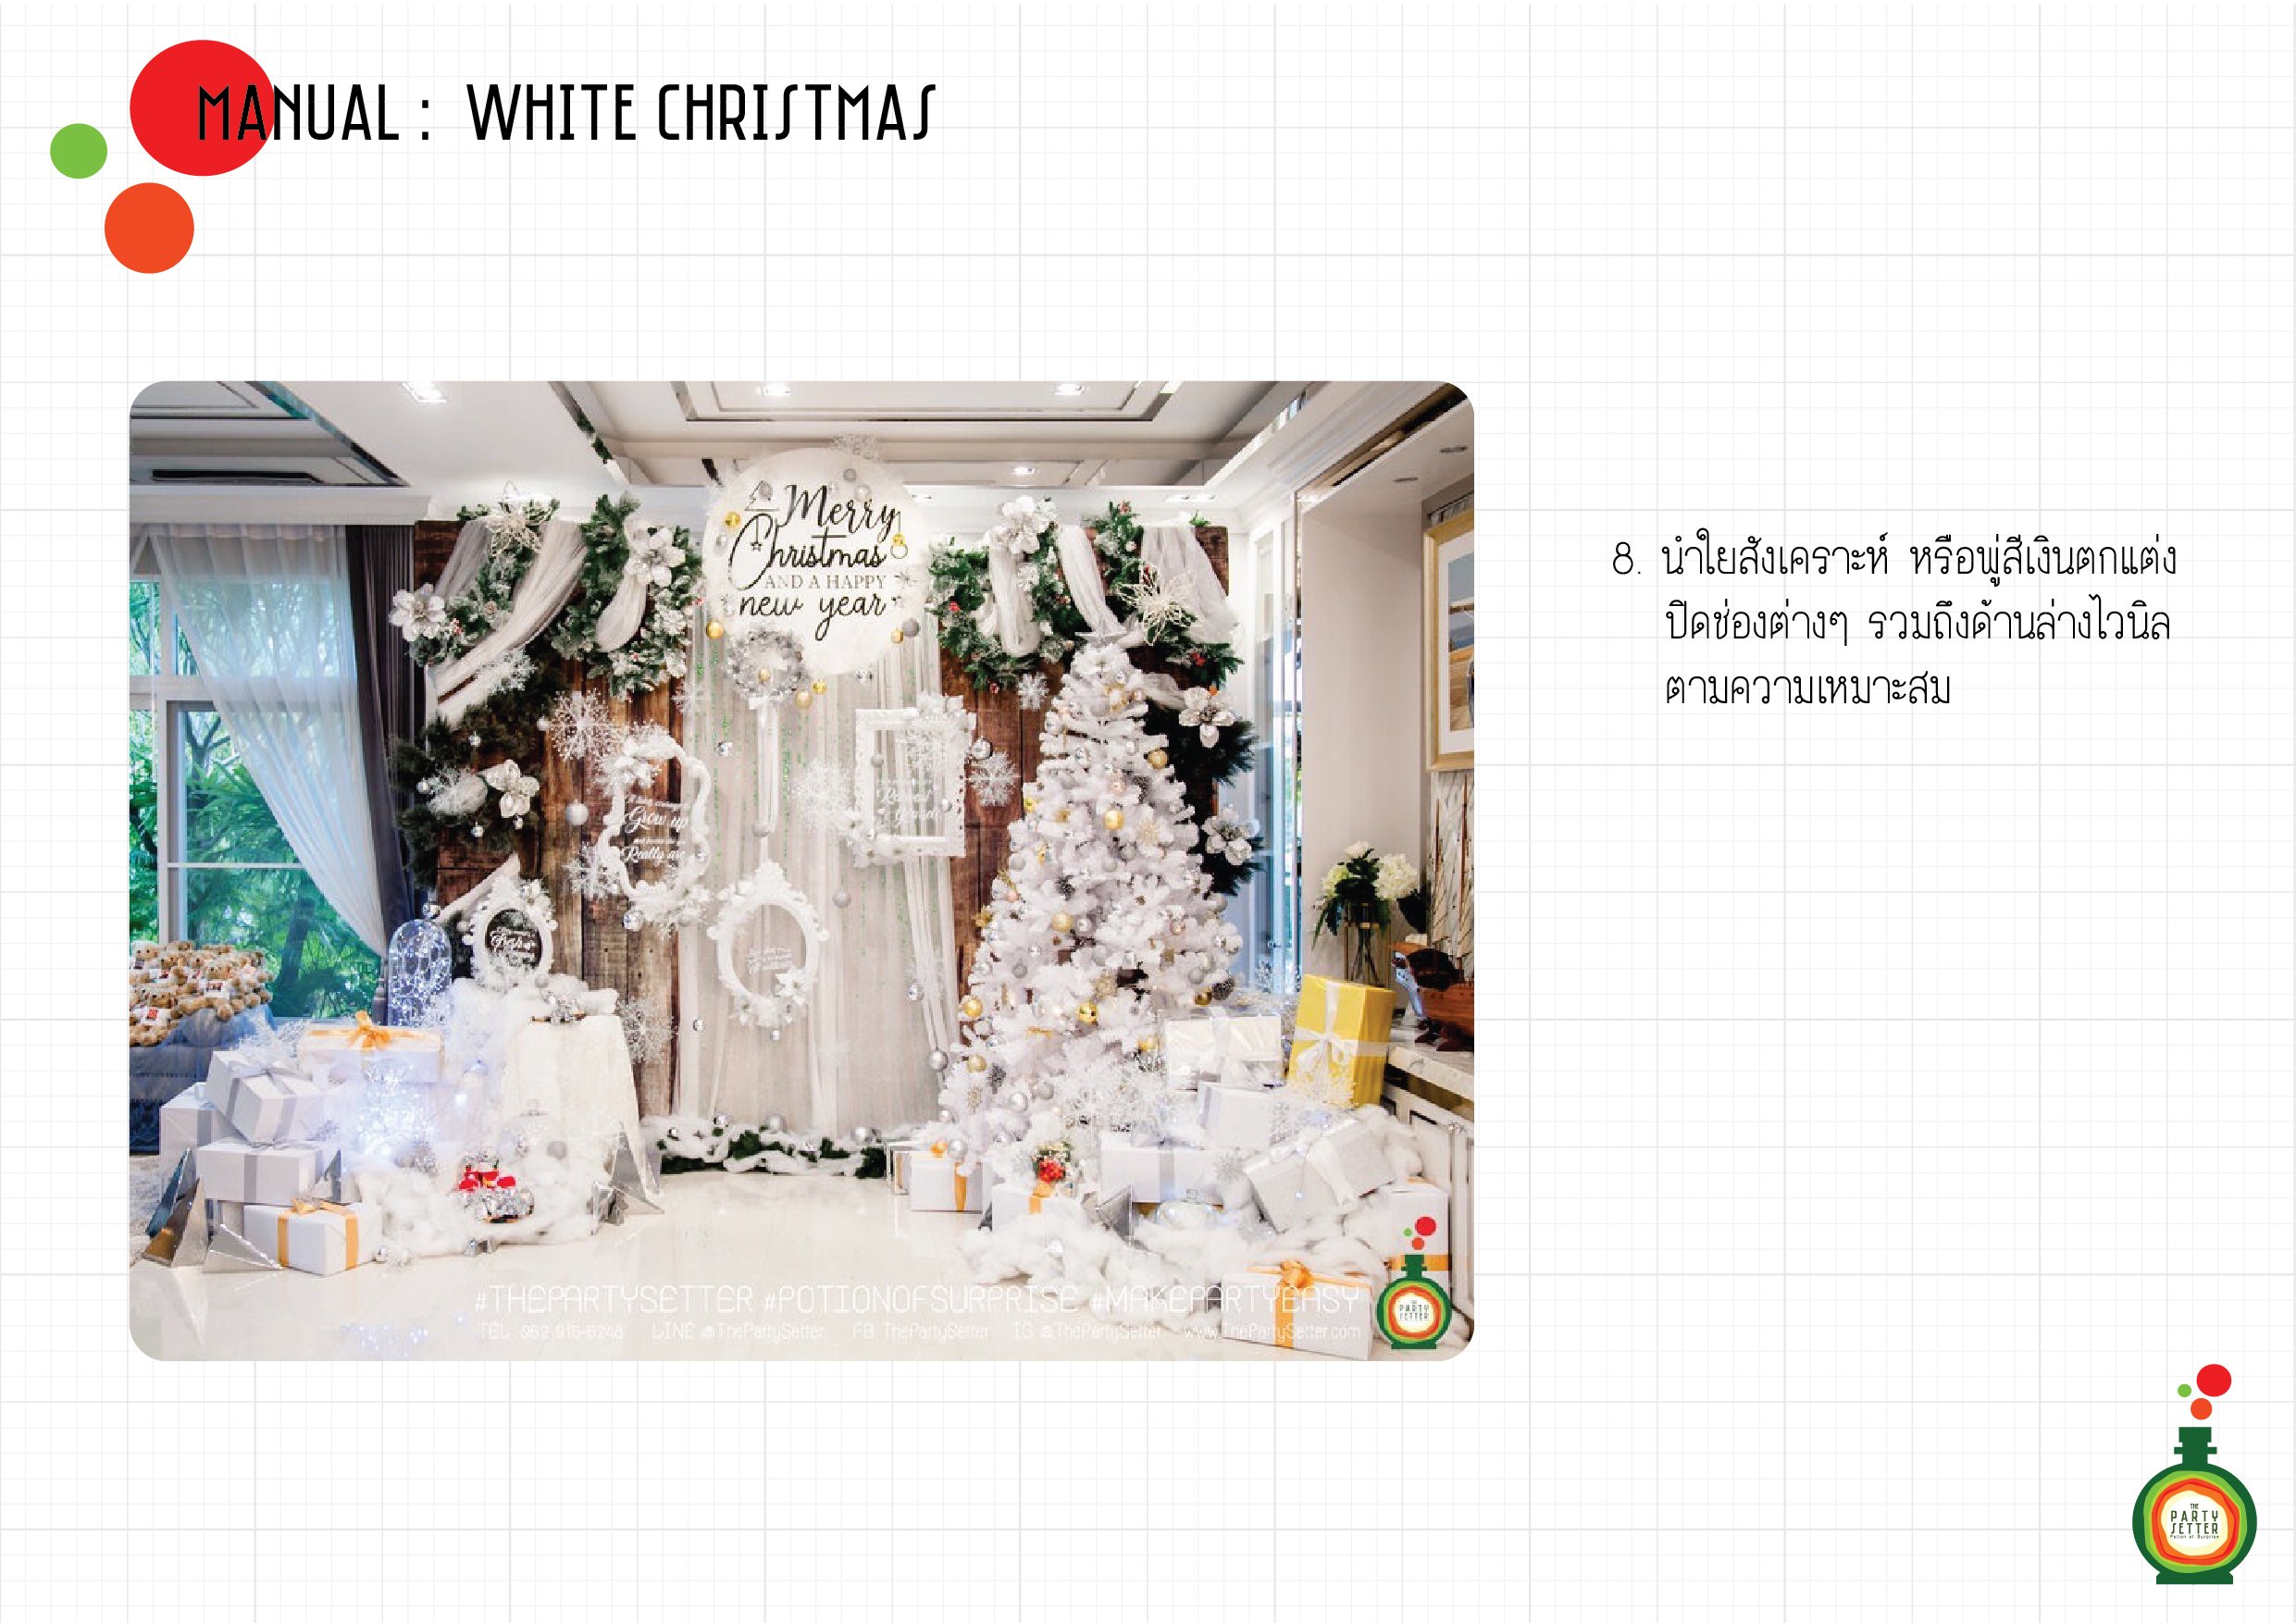 Manual_White Christmas-08-01.jpg